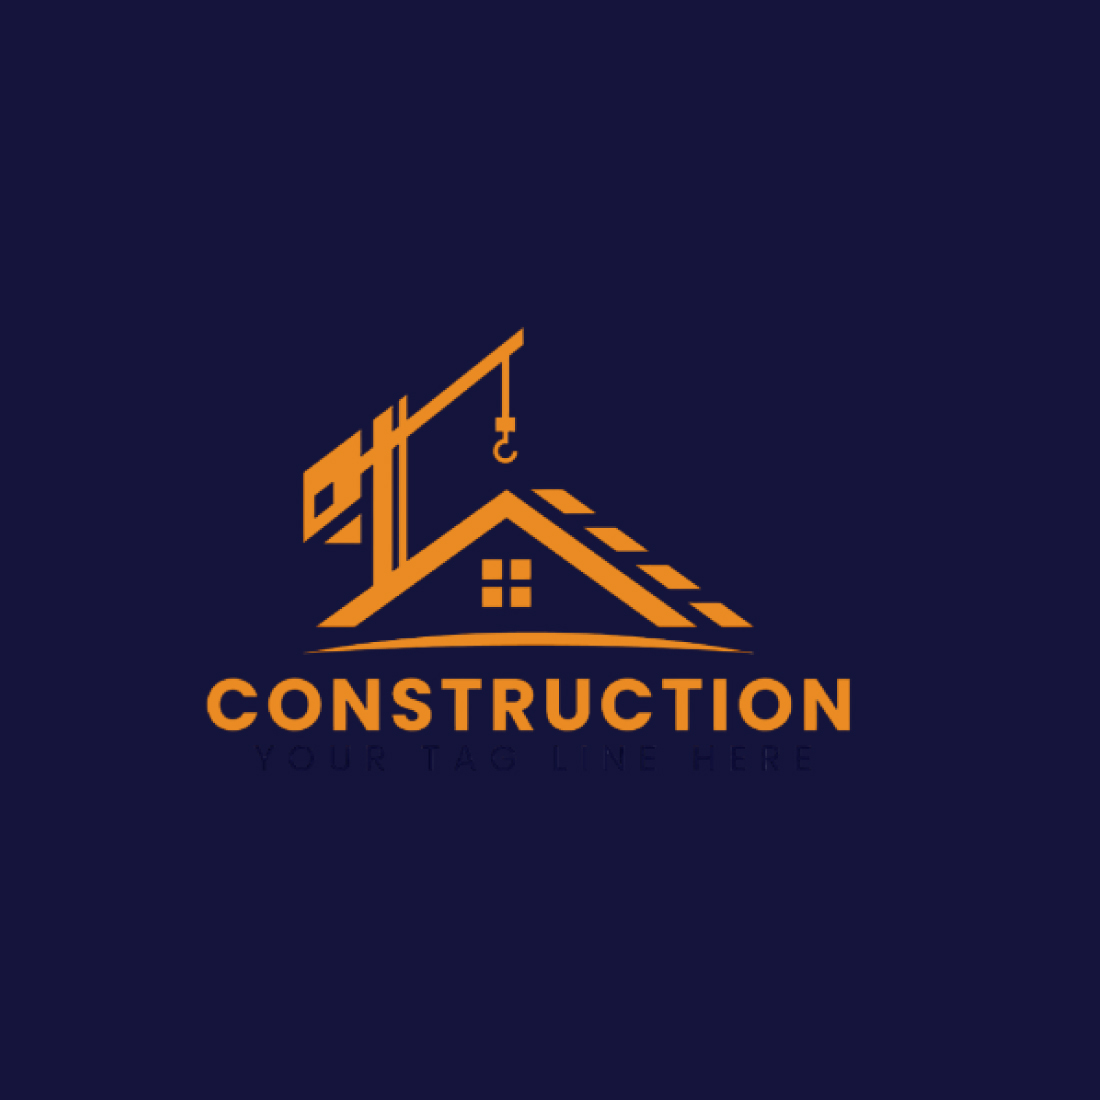 Creative Construction Logo Template cover image.